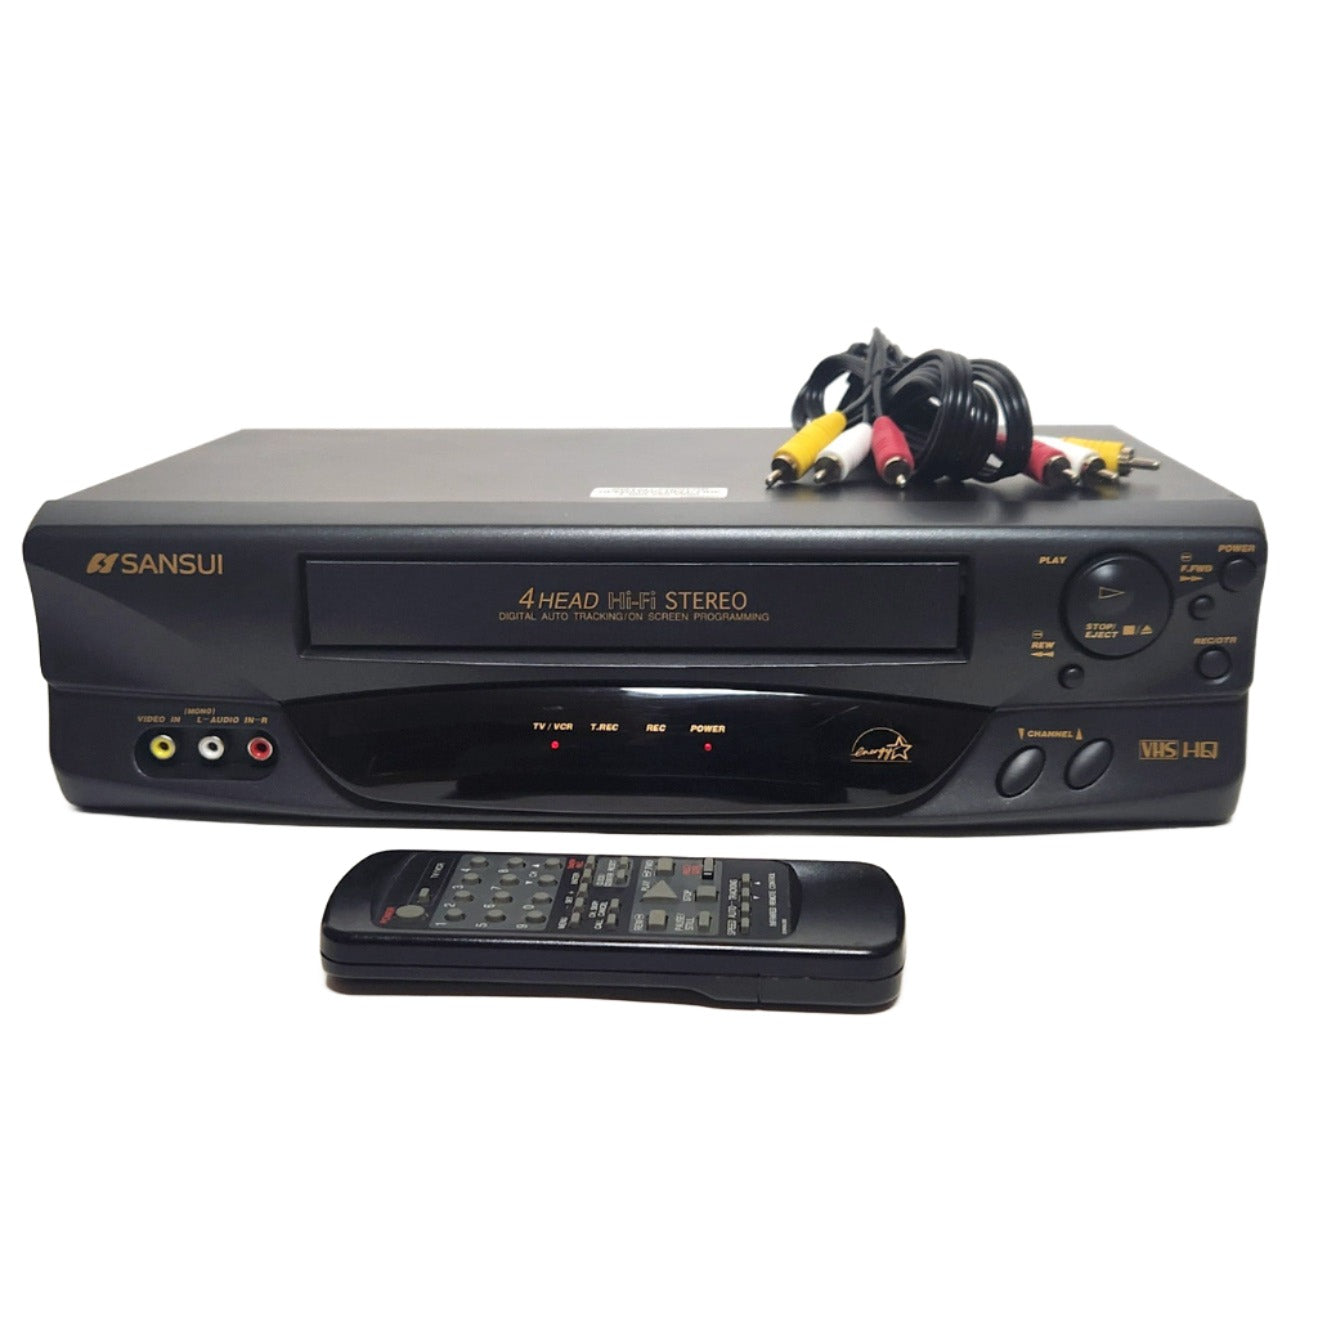 Sansui VHF6010C VCR, 4-Head Hi-Fi Stereo